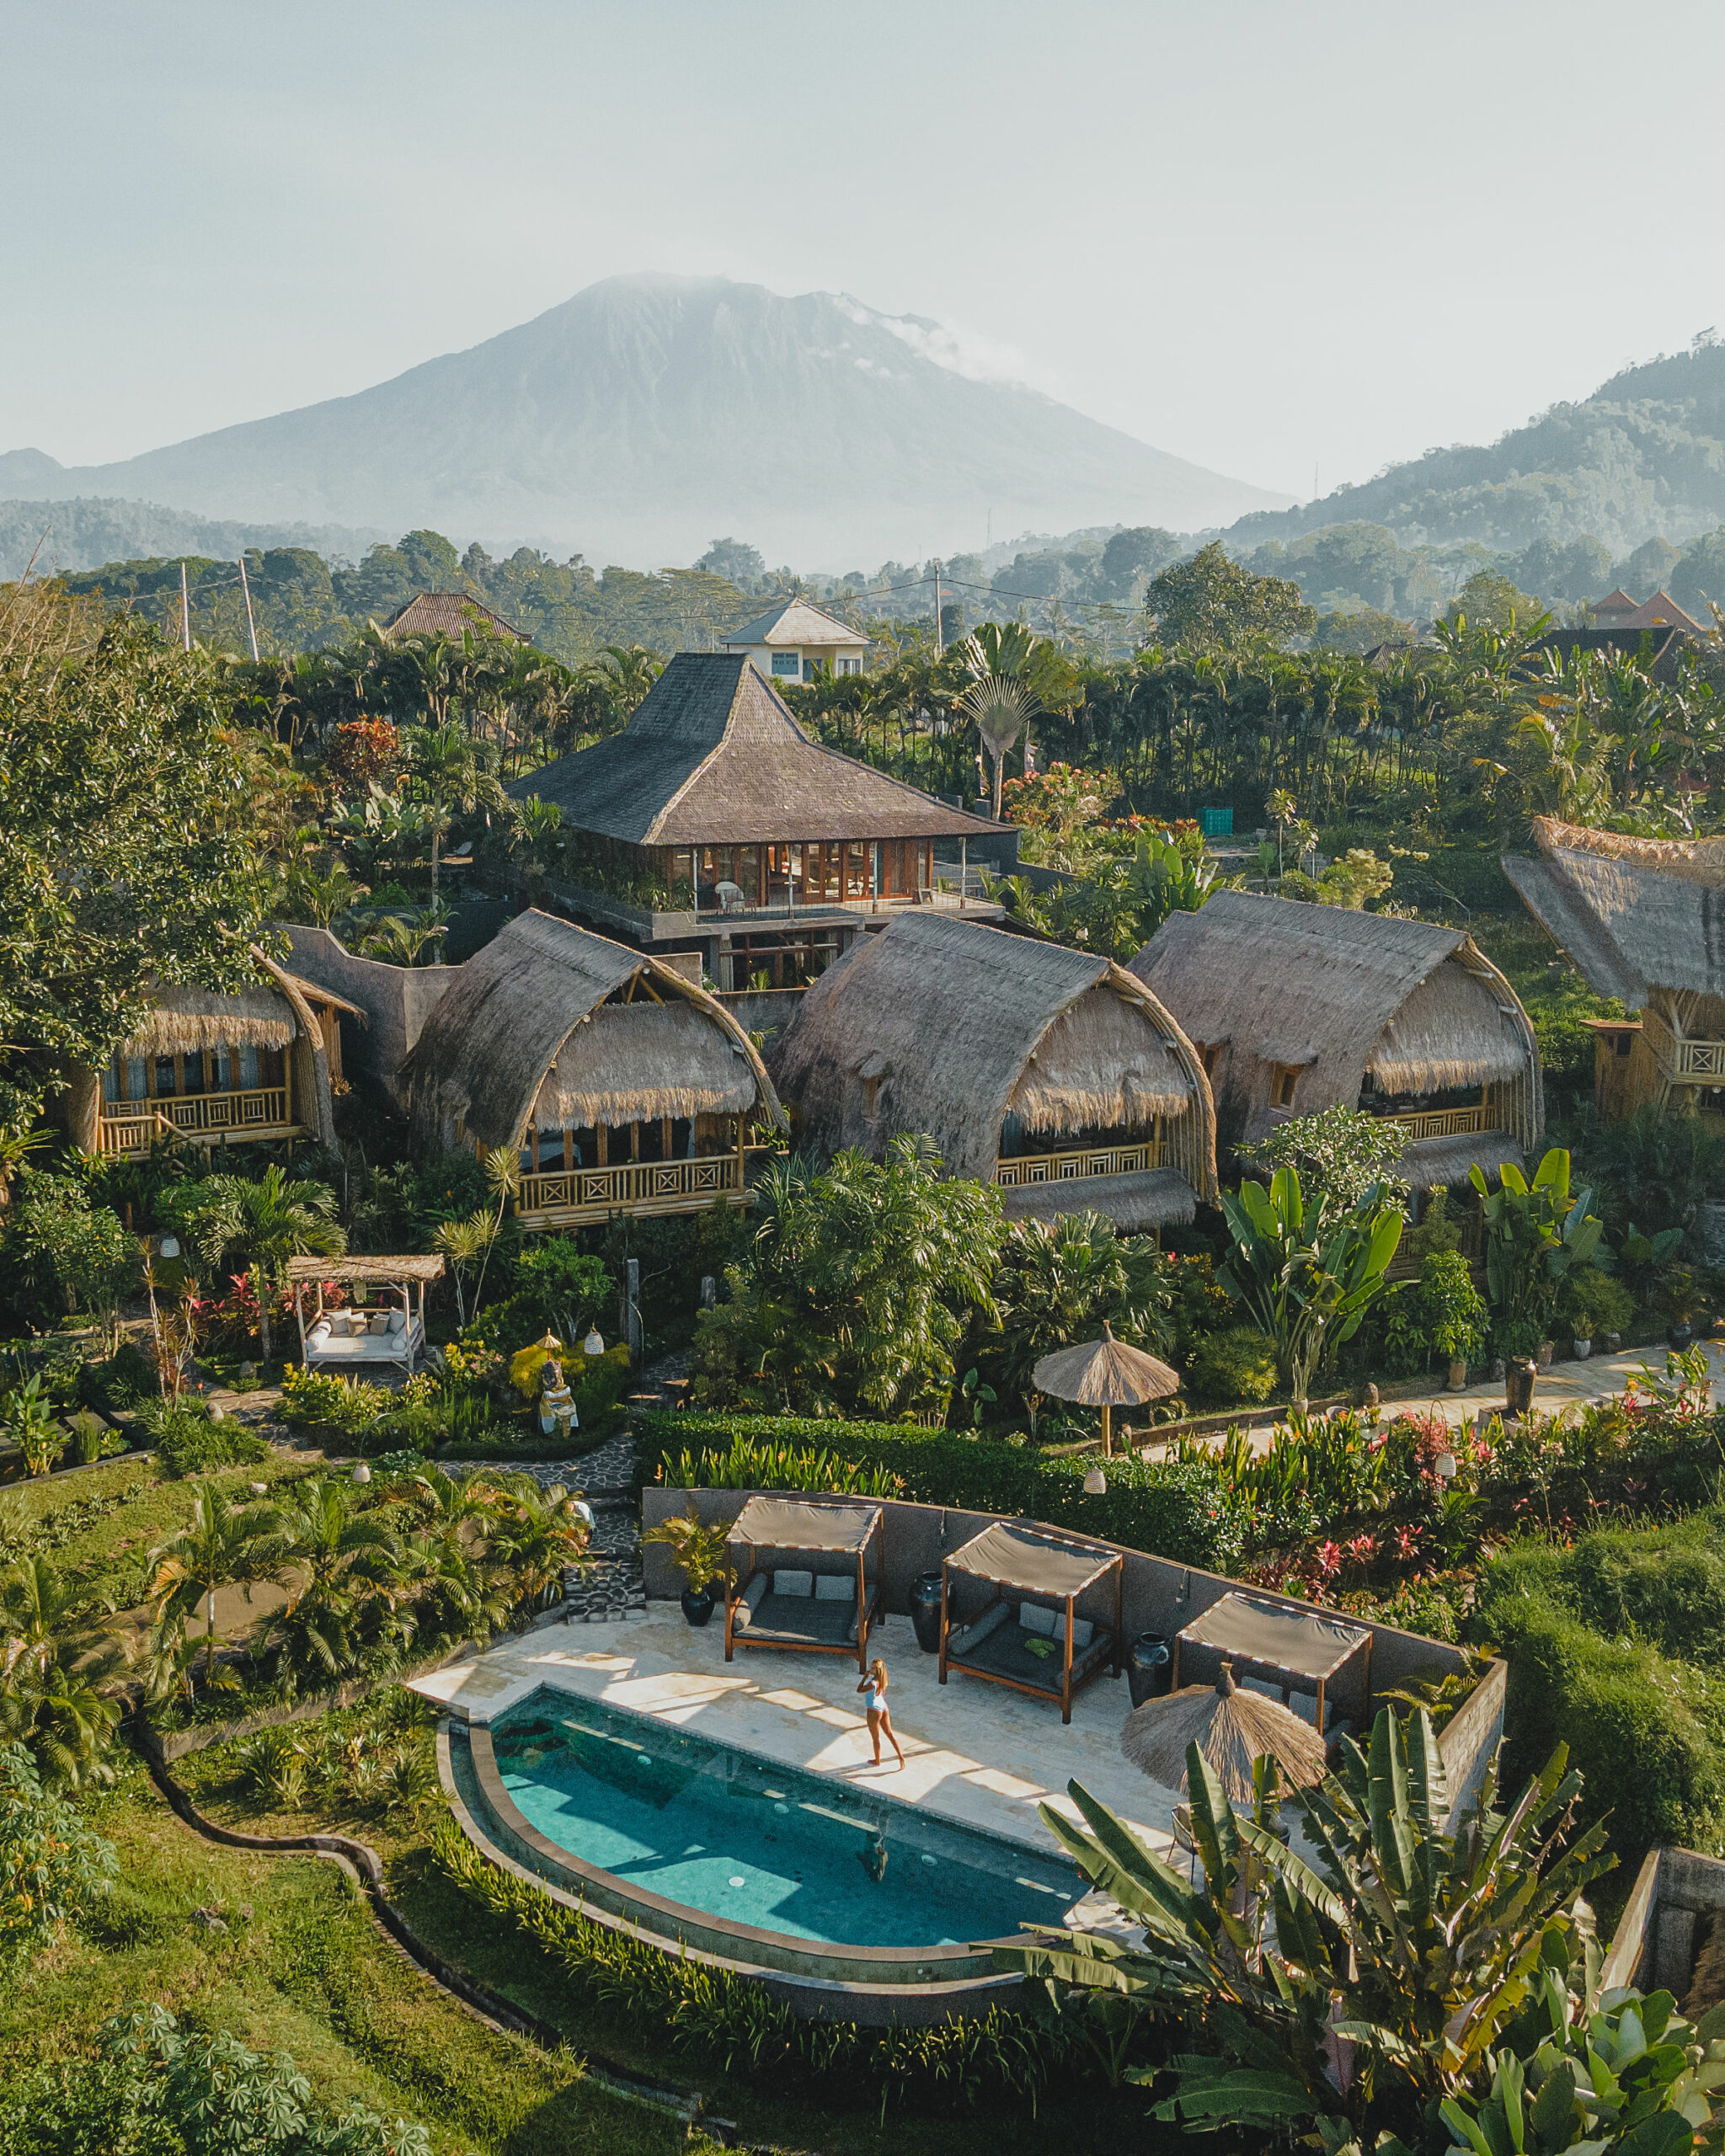 Samanvaya Resort with views of a volcano